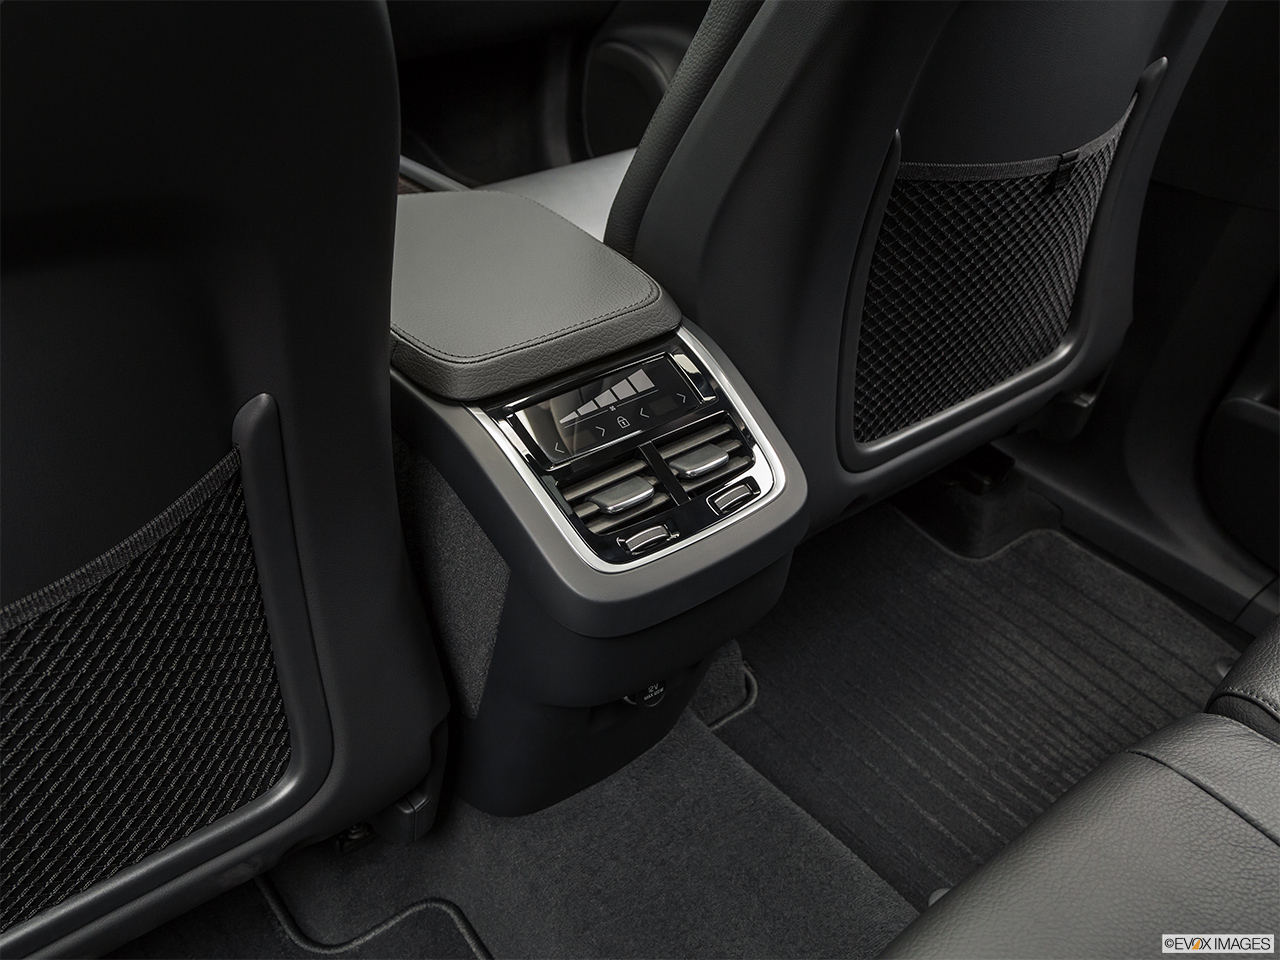 2019 Volvo XC90  T6 Momentum Rear A/C controls. 